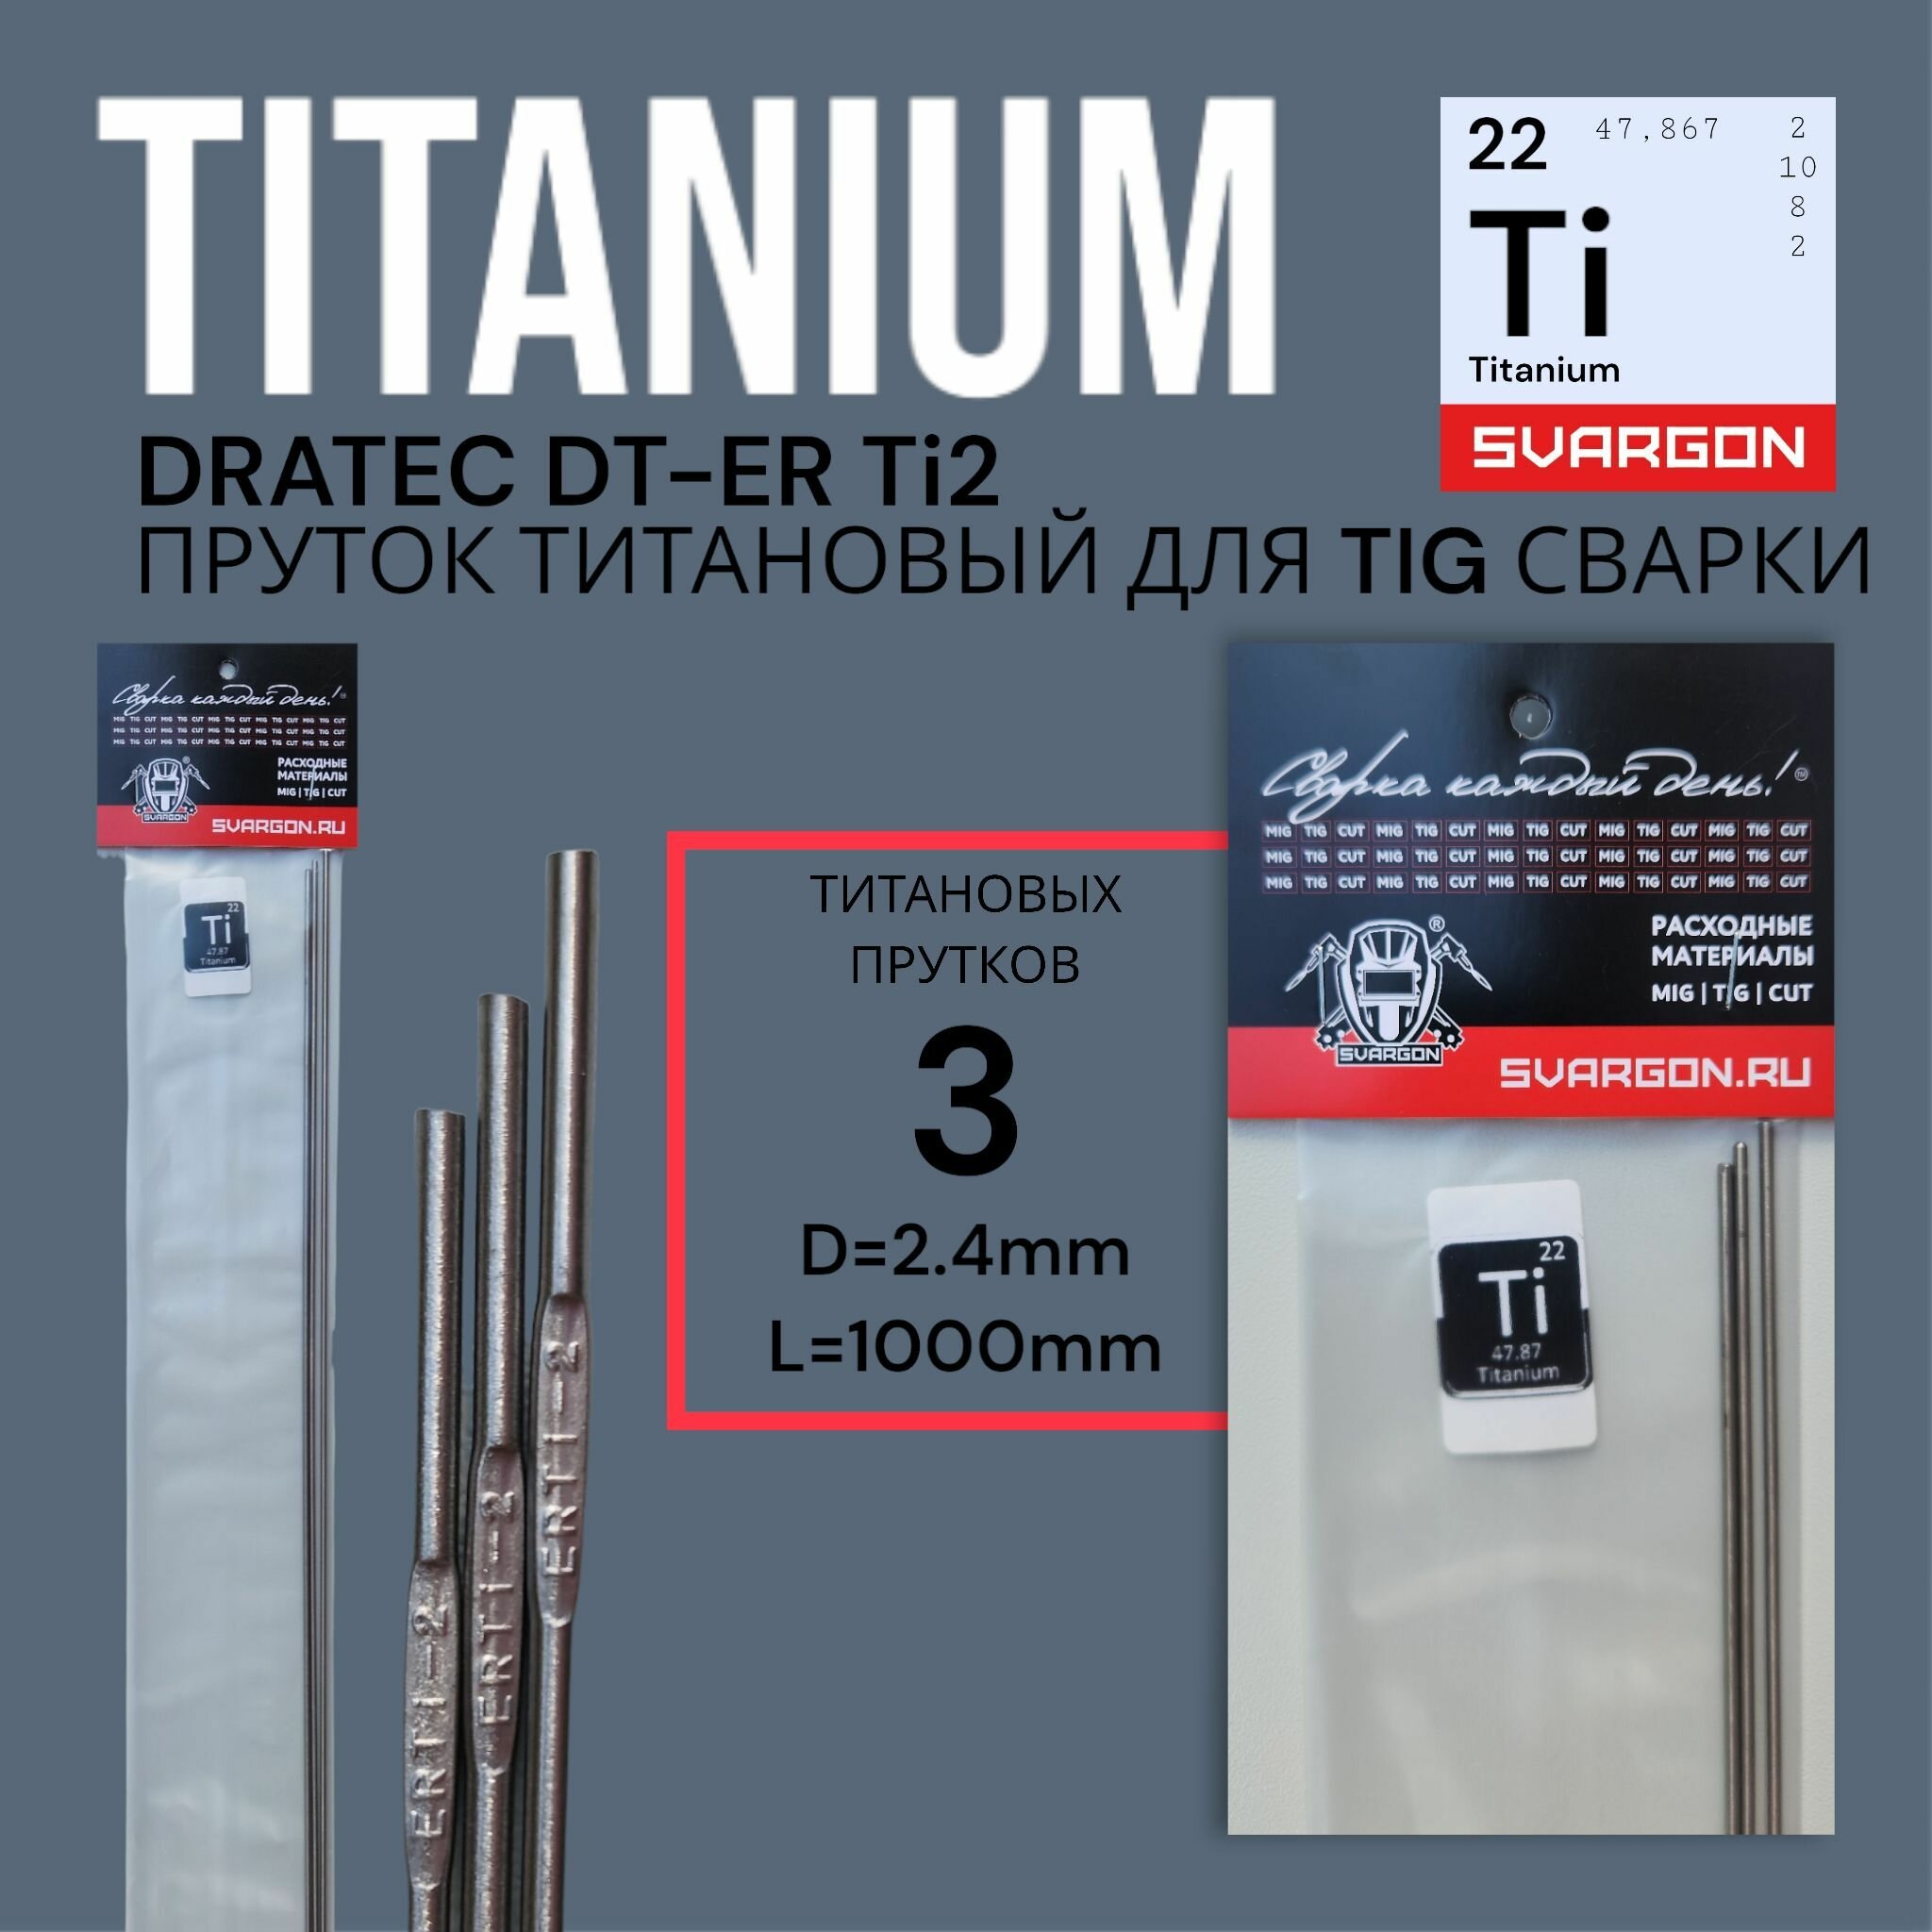 Пруток присадочный титановый для TIG сварки Dratec DT-ERTi2 d24мм L1000мм 3шт (60гр)